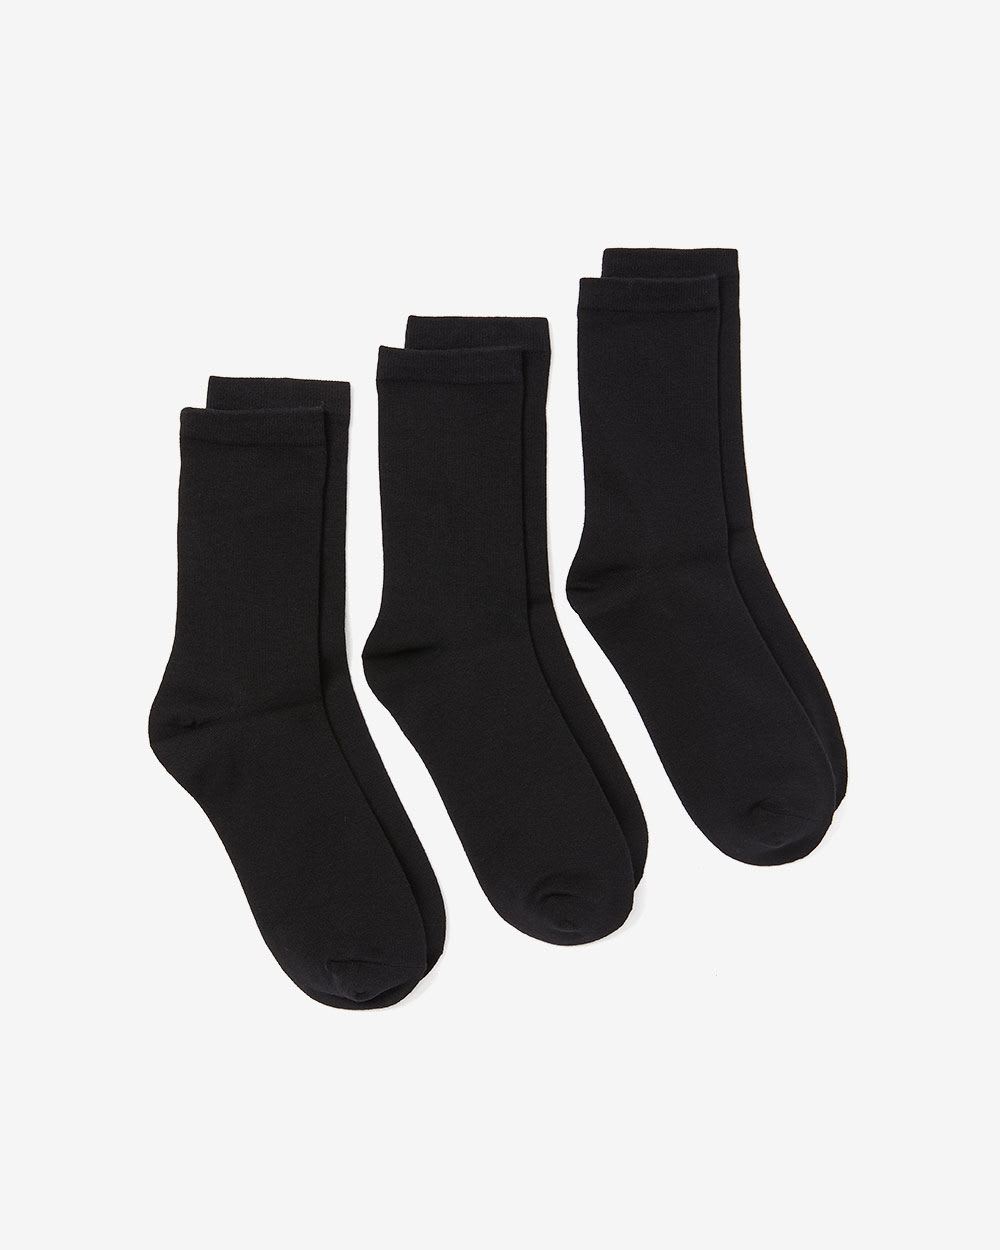 3-Pair Set of Socks